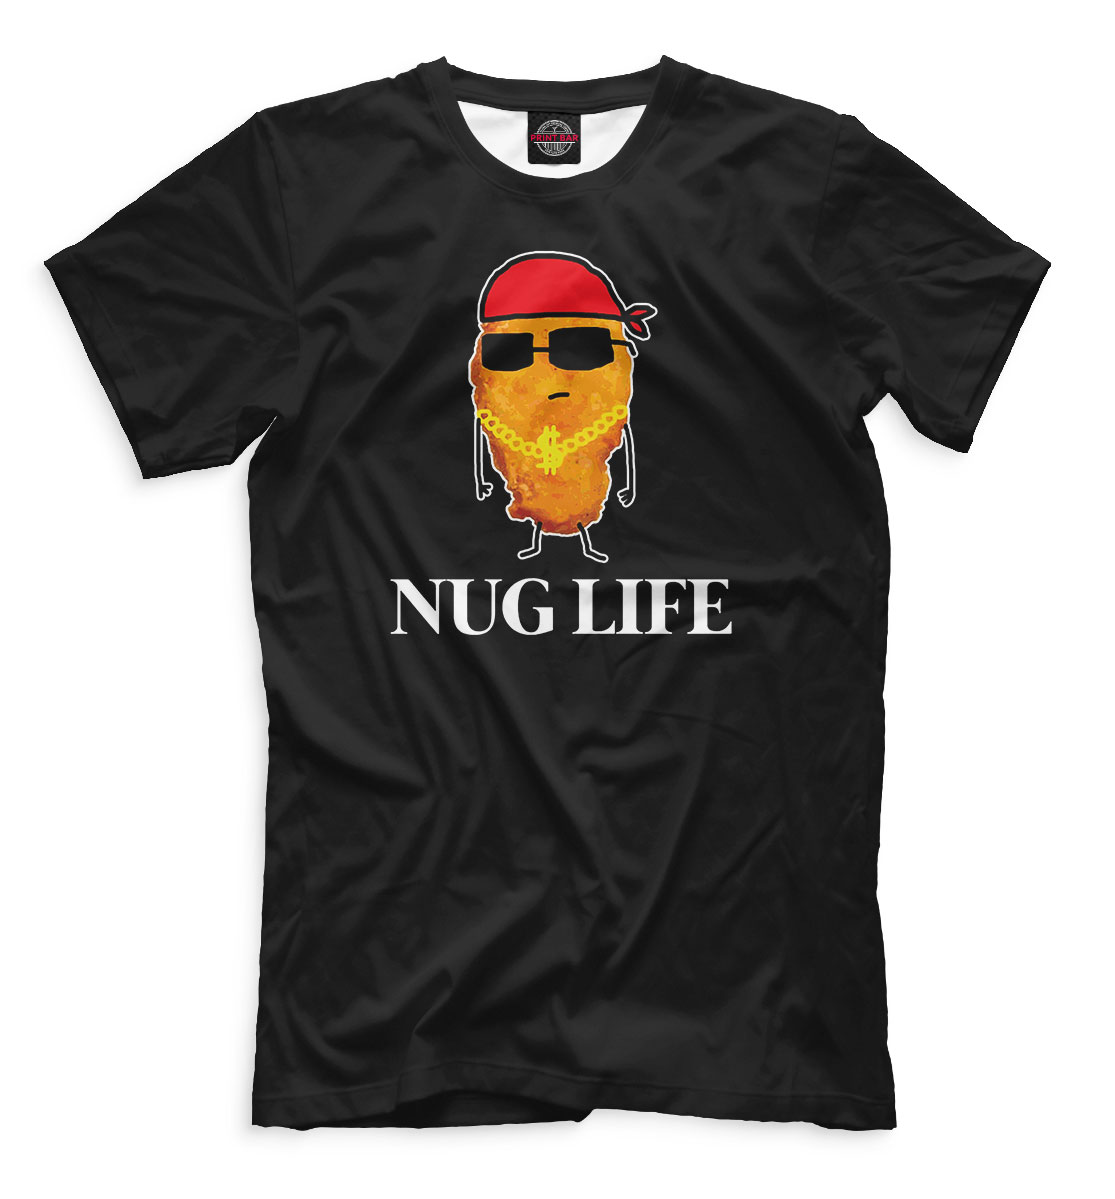 Nug life